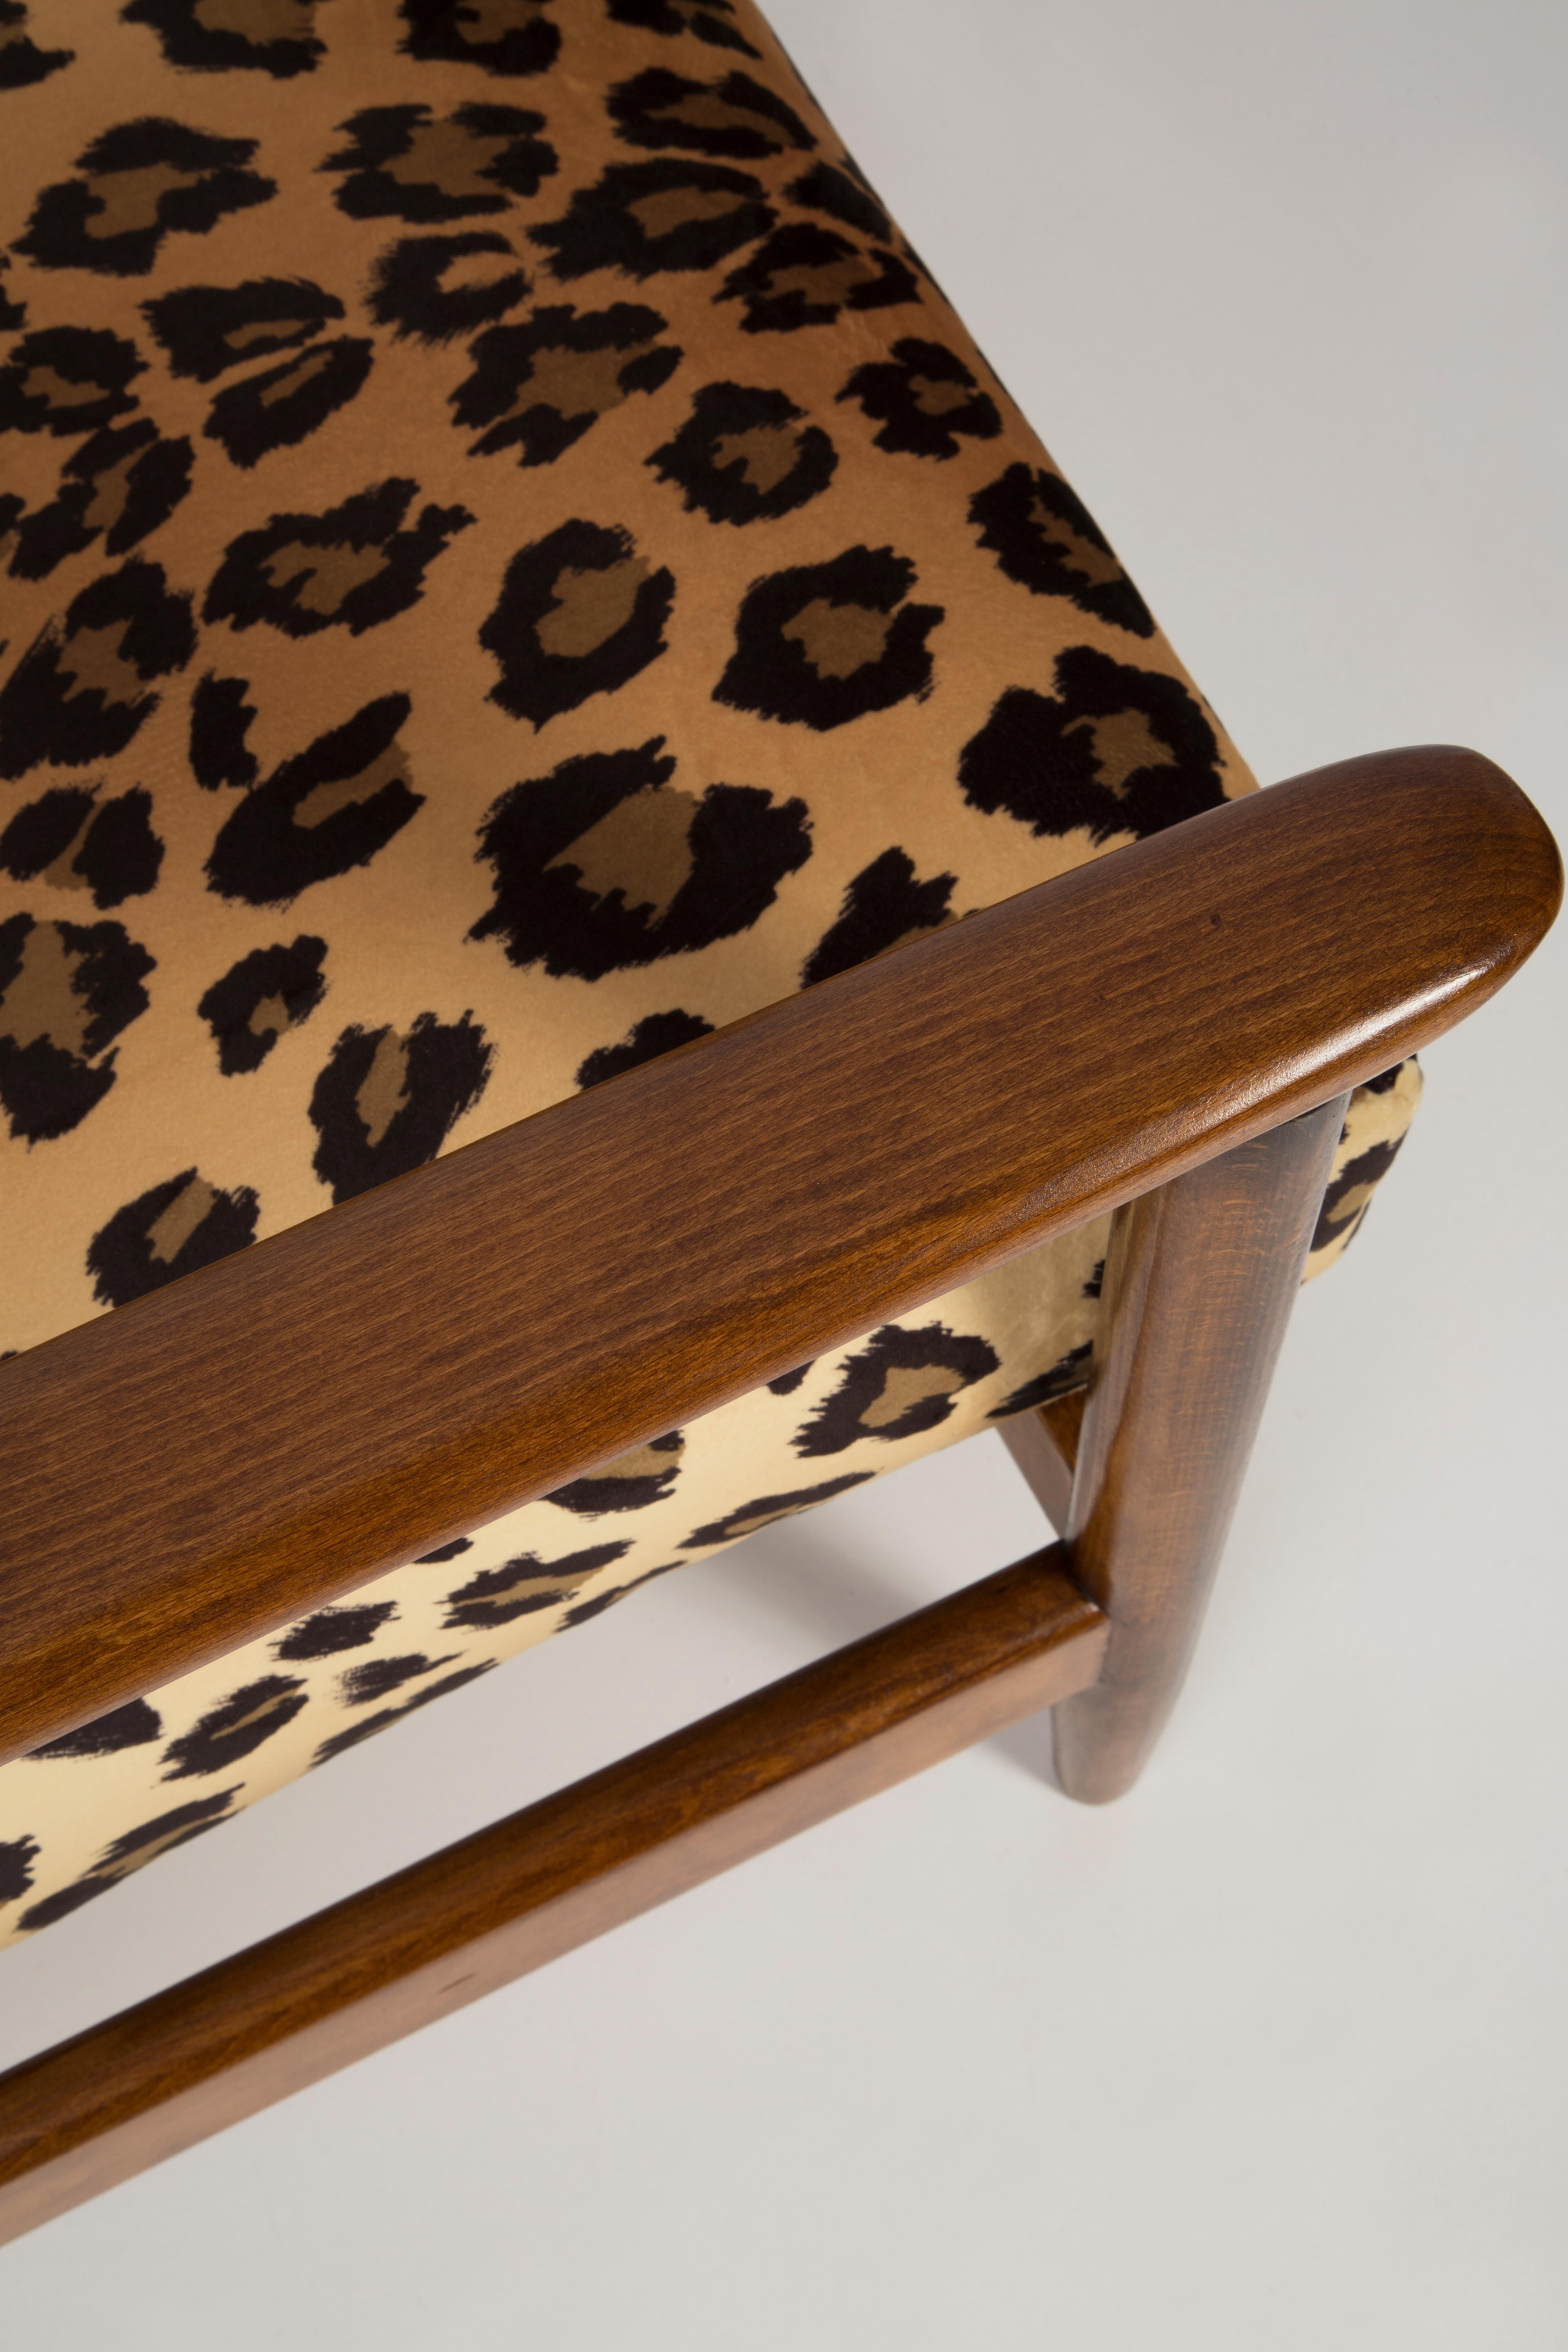 leopard print armchair